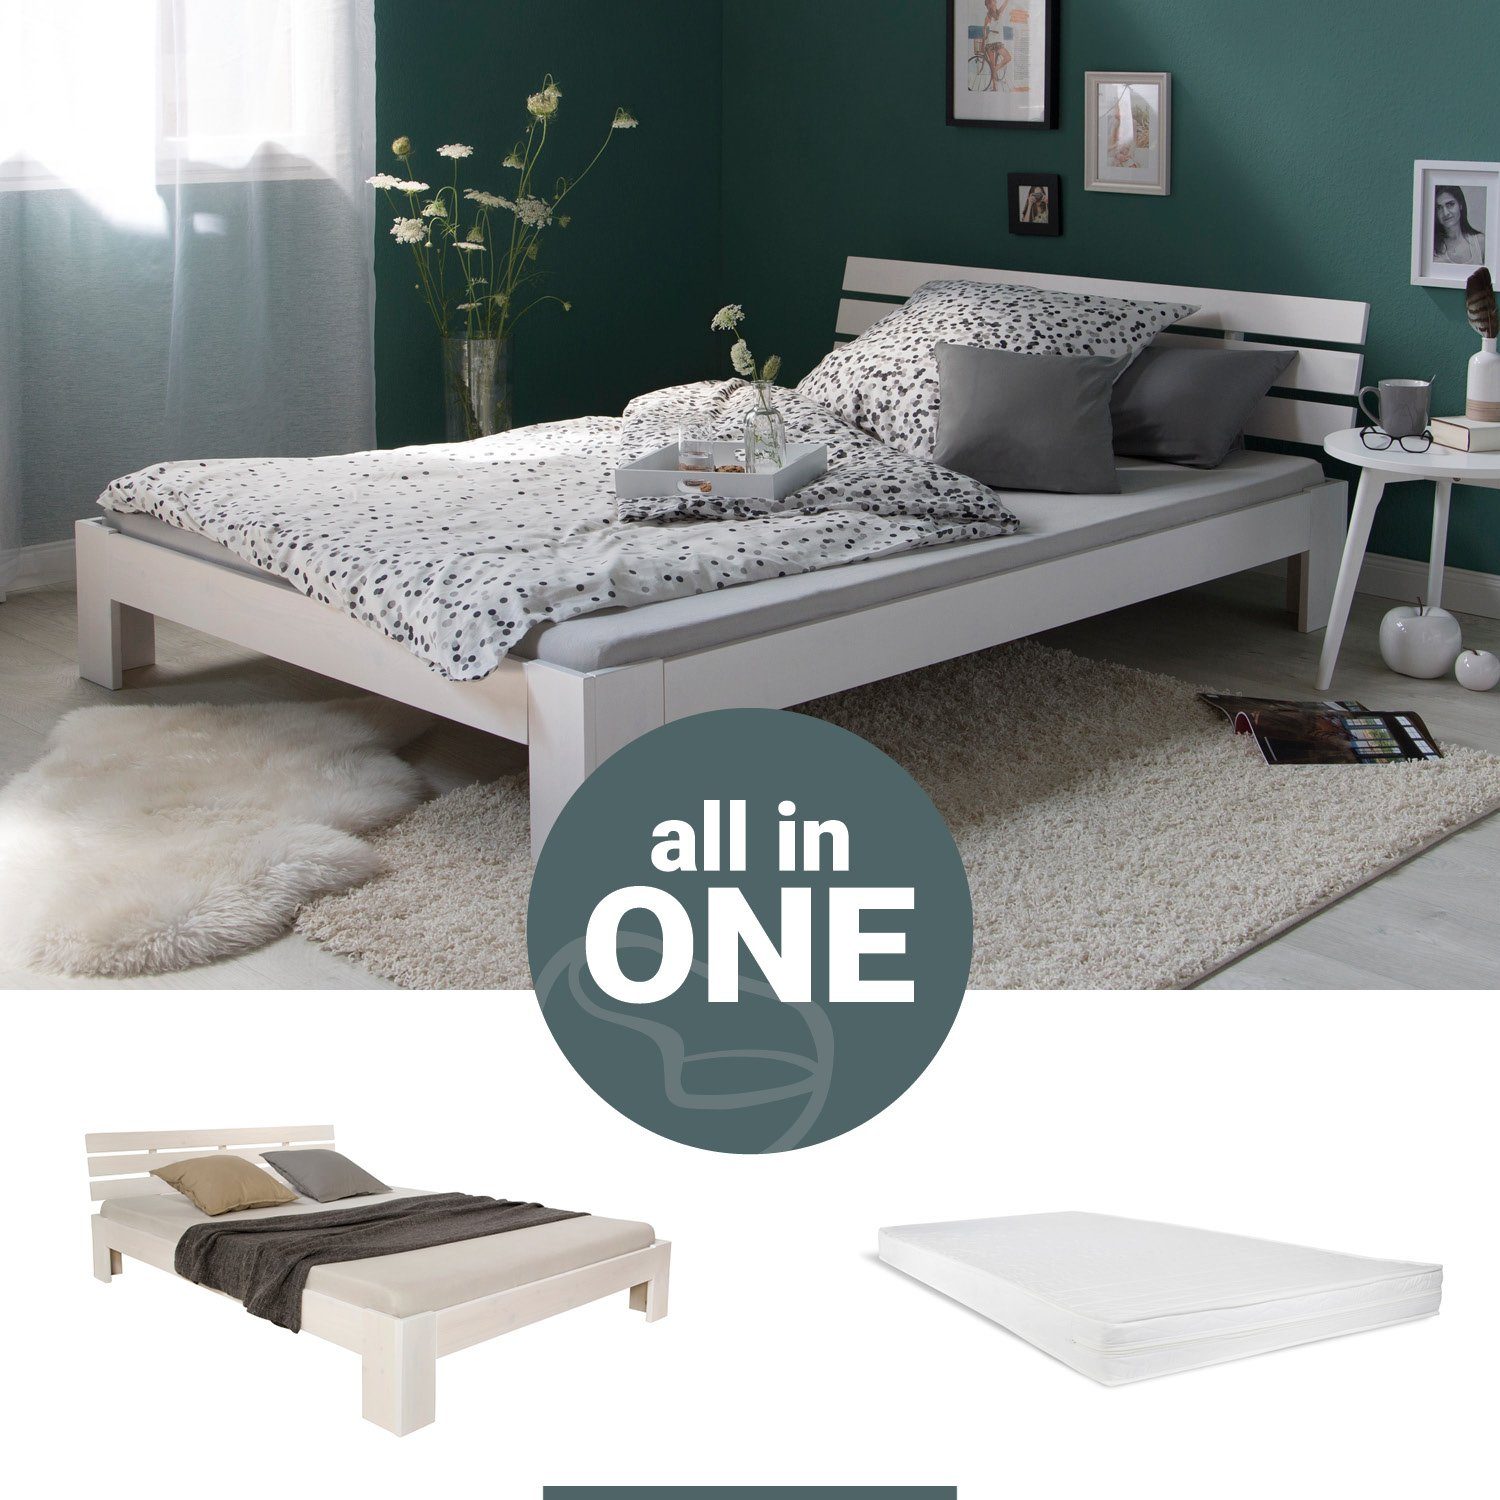 Homestyle4u Holzbett Doppelbett mit Matratze und Lattenrost 120x200 cm weiß Kiefer Massiv